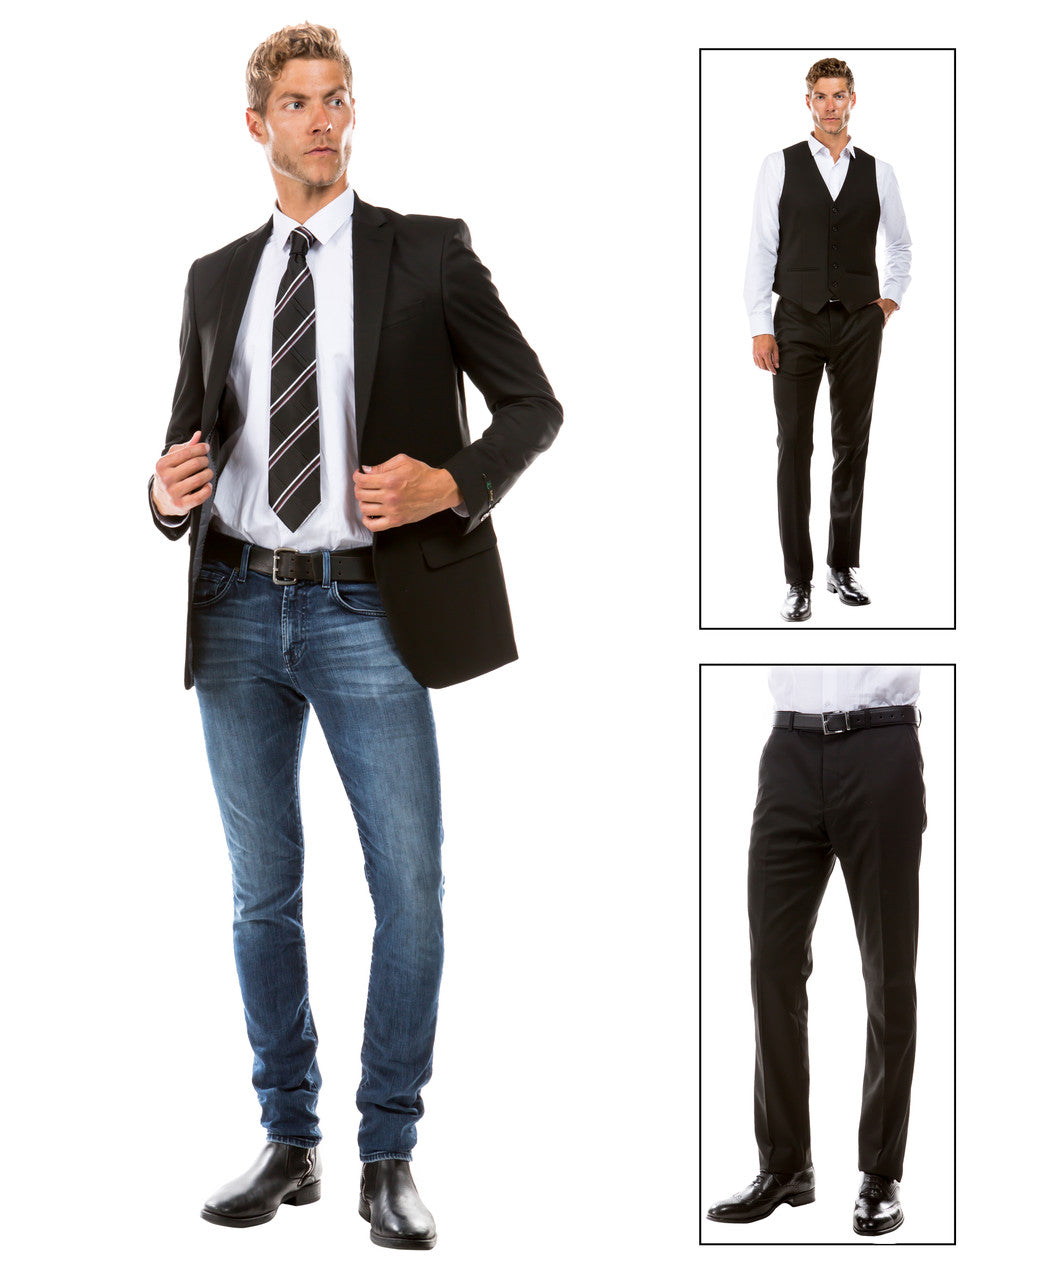 Tan Zegarie Suit Separates Solid Dinner Jacket For Men MJ346-05